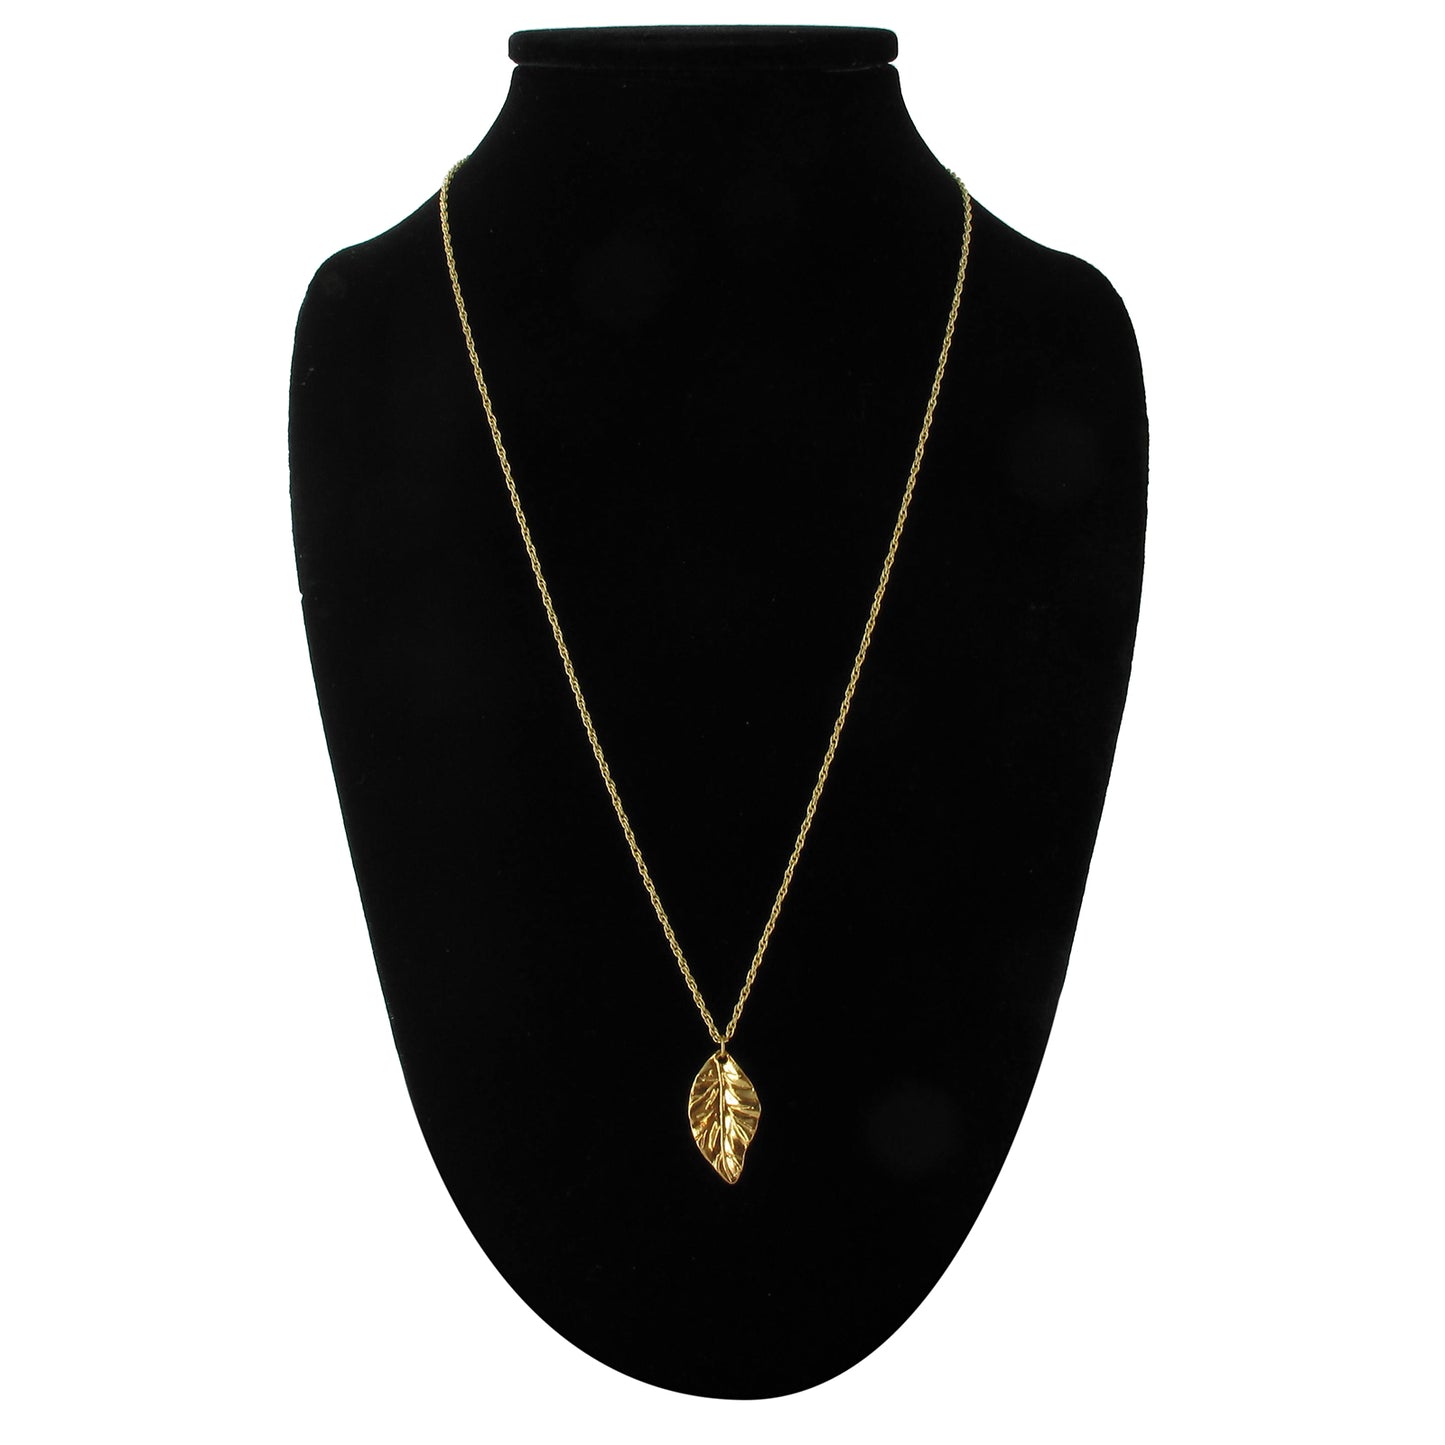 Ky & Co Gold Tone Leaf Dangle Pierced Earrings Pendant Necklace Jewelry Set